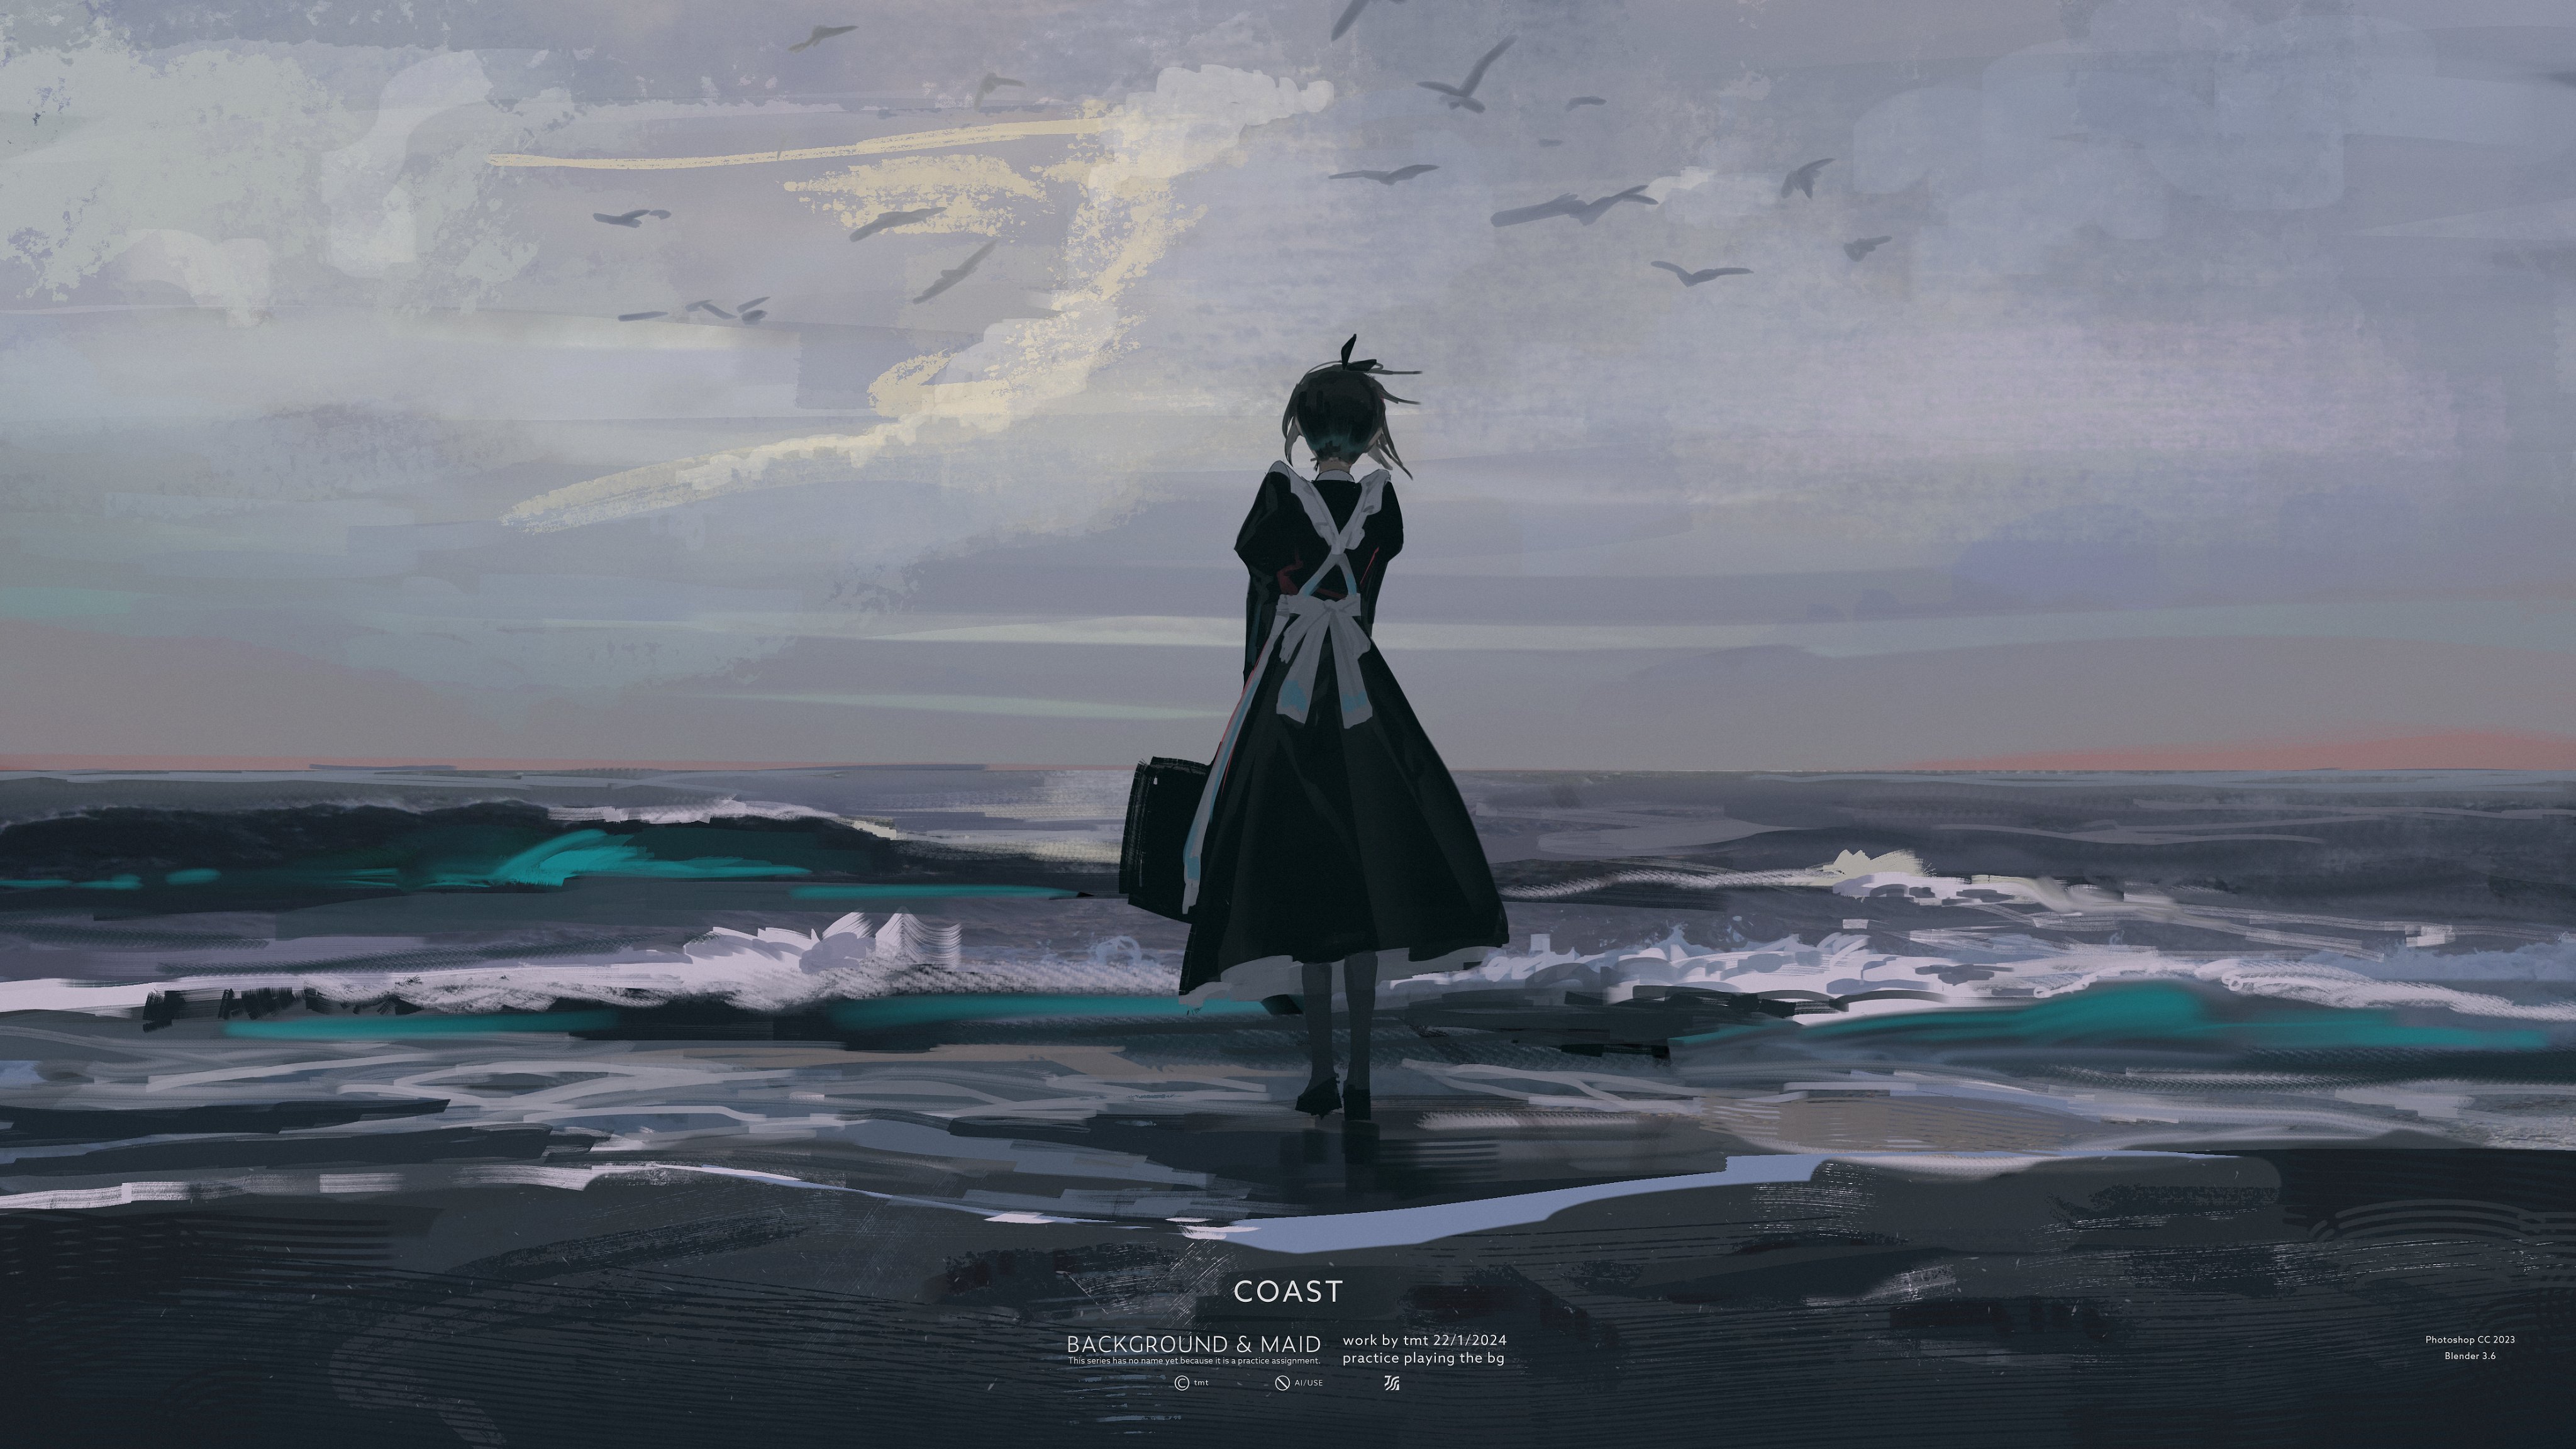 General 4096x2304 tmt coast sea maid outfit maid horizon birds clouds digital art artwork watermarked